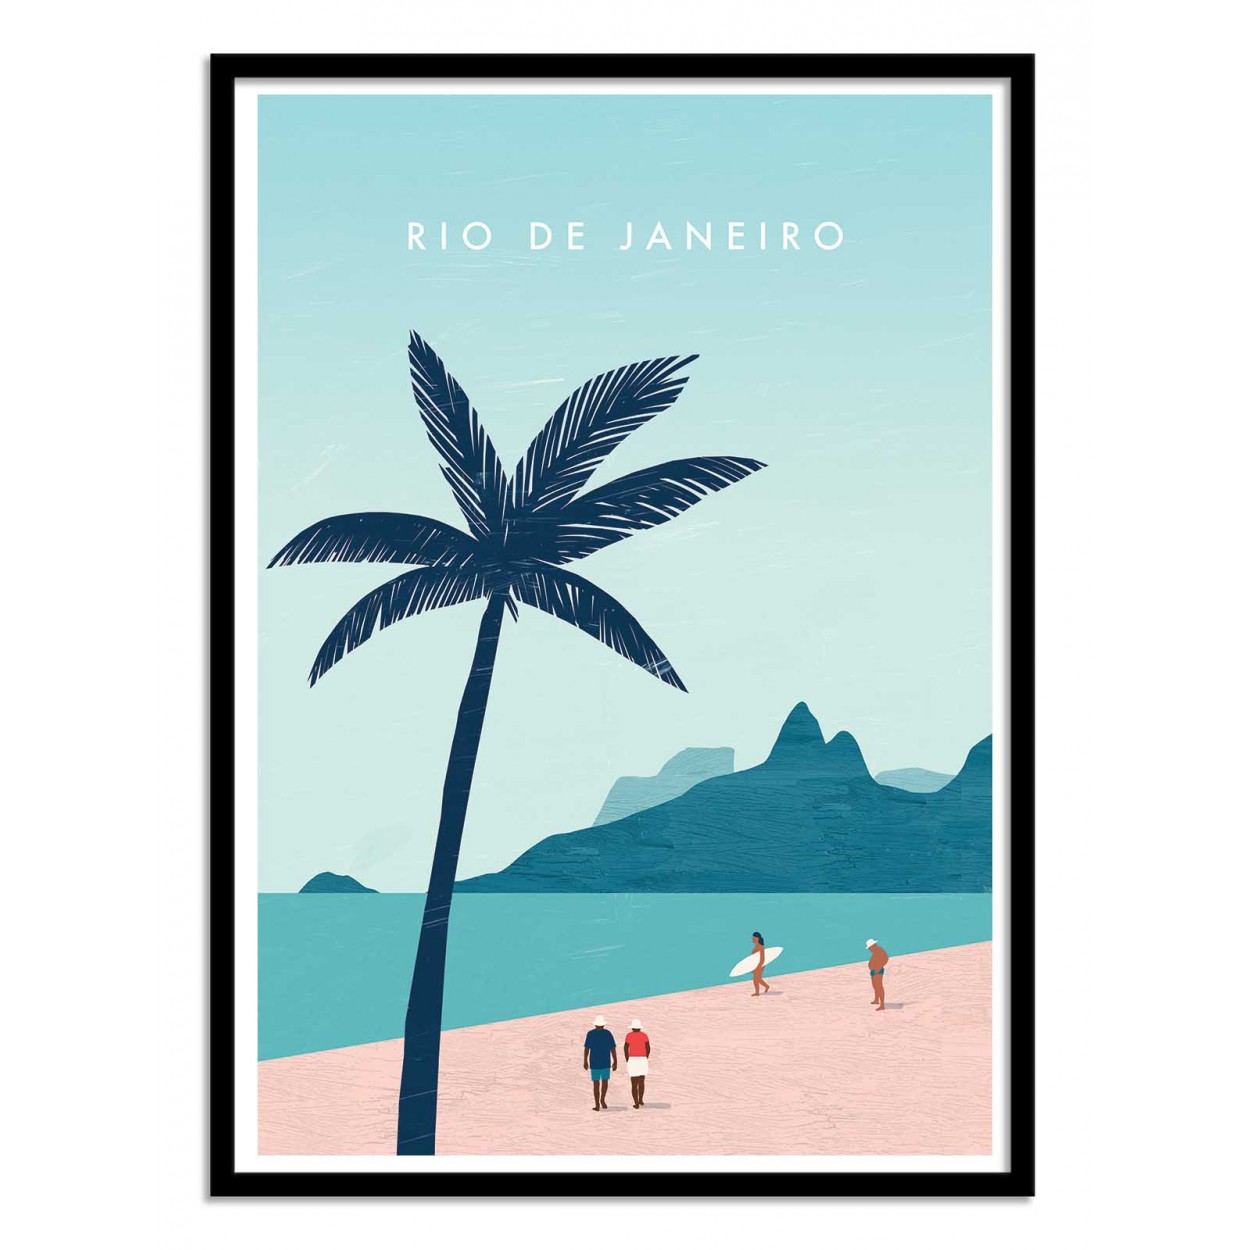 Sustainable Rio de Janeiro Poster Rio de Janeiro Art Print Rio de Janeiro Print Rio de Janeiro Cities Poster by Katinka Reinke